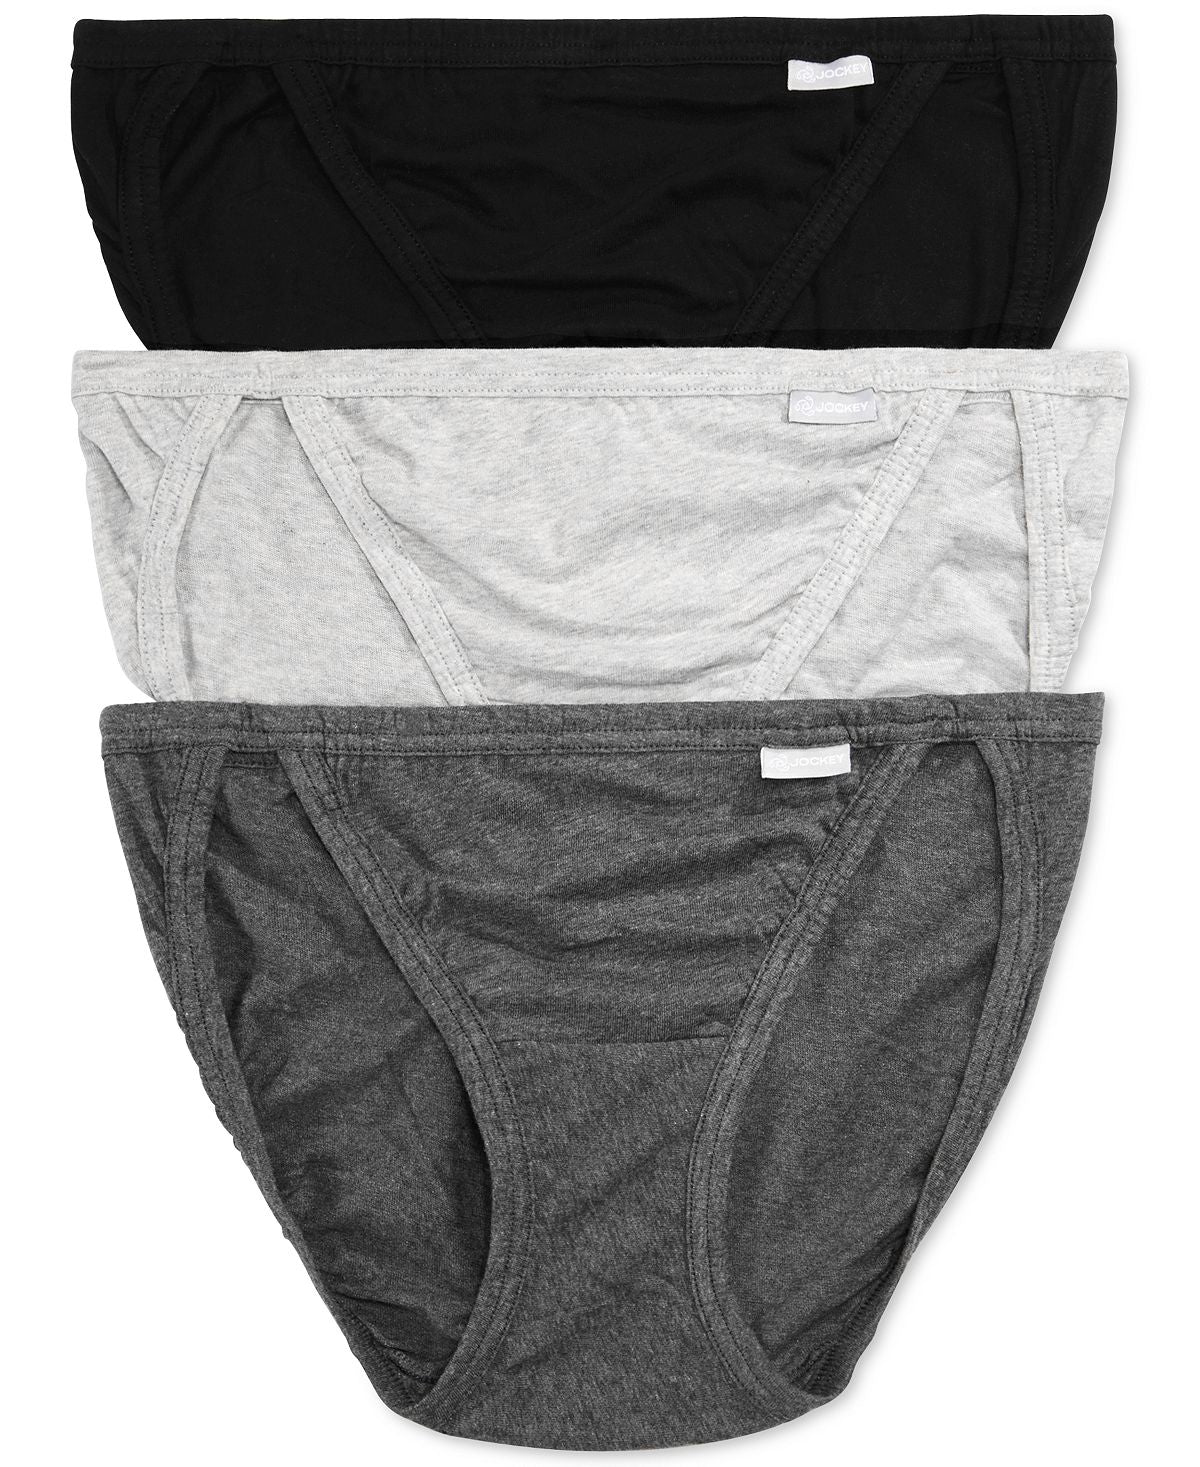 Jockey Men's Underwear Elance String Bikini - 6 Pack, Black, S